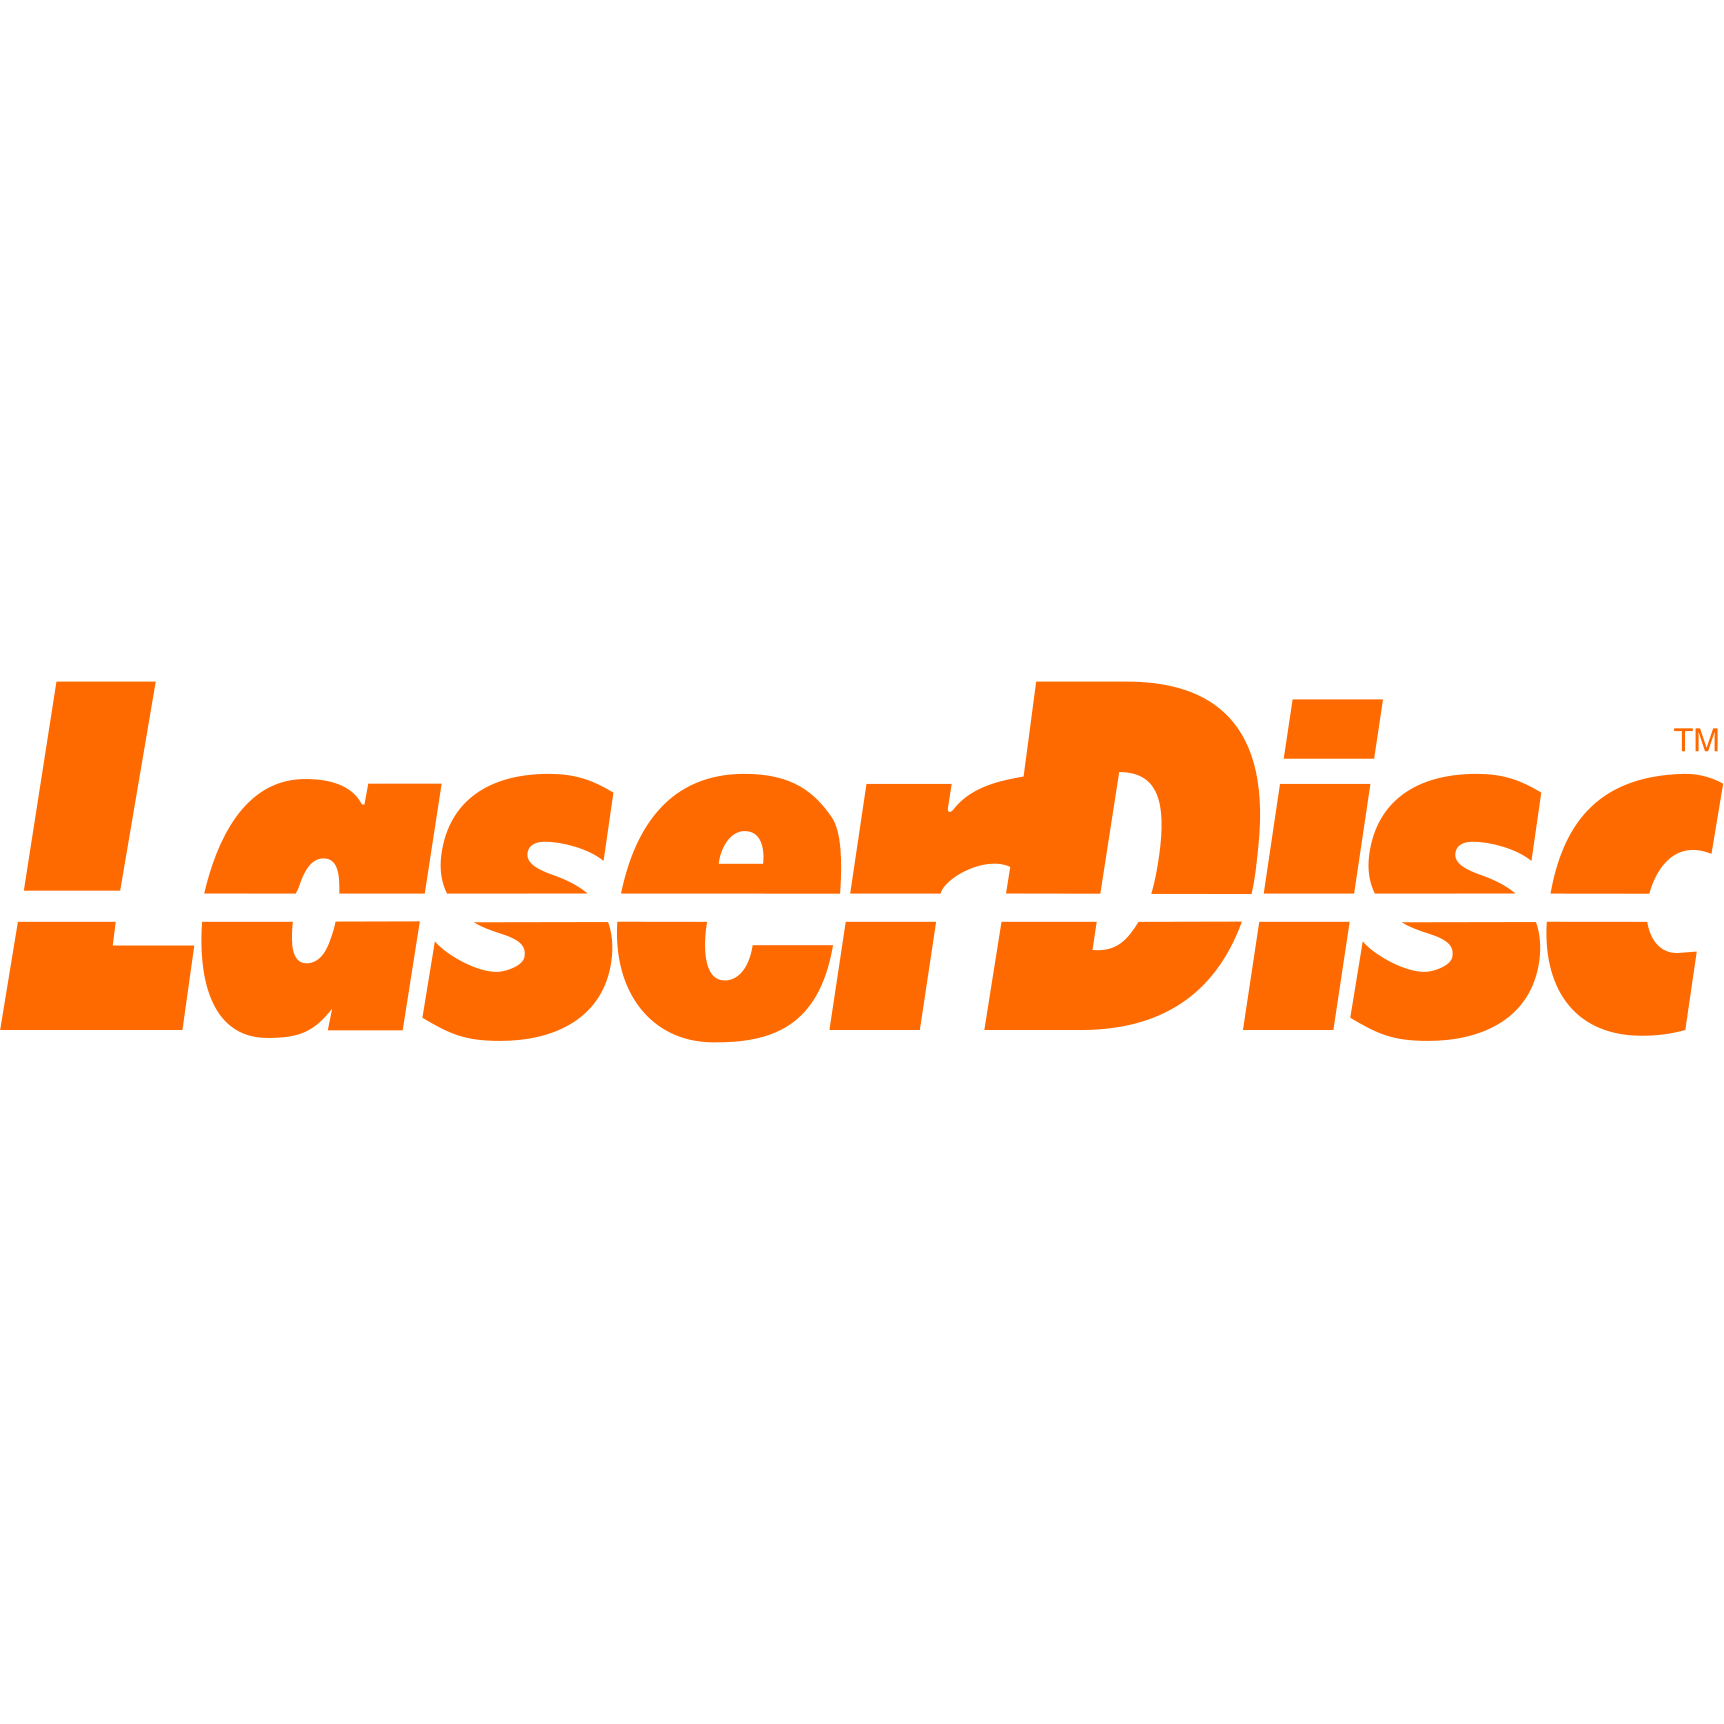 Laserdisc Logo - LaserDisc Logo. Hardware Envy. Logos, Graphic art, Bike design